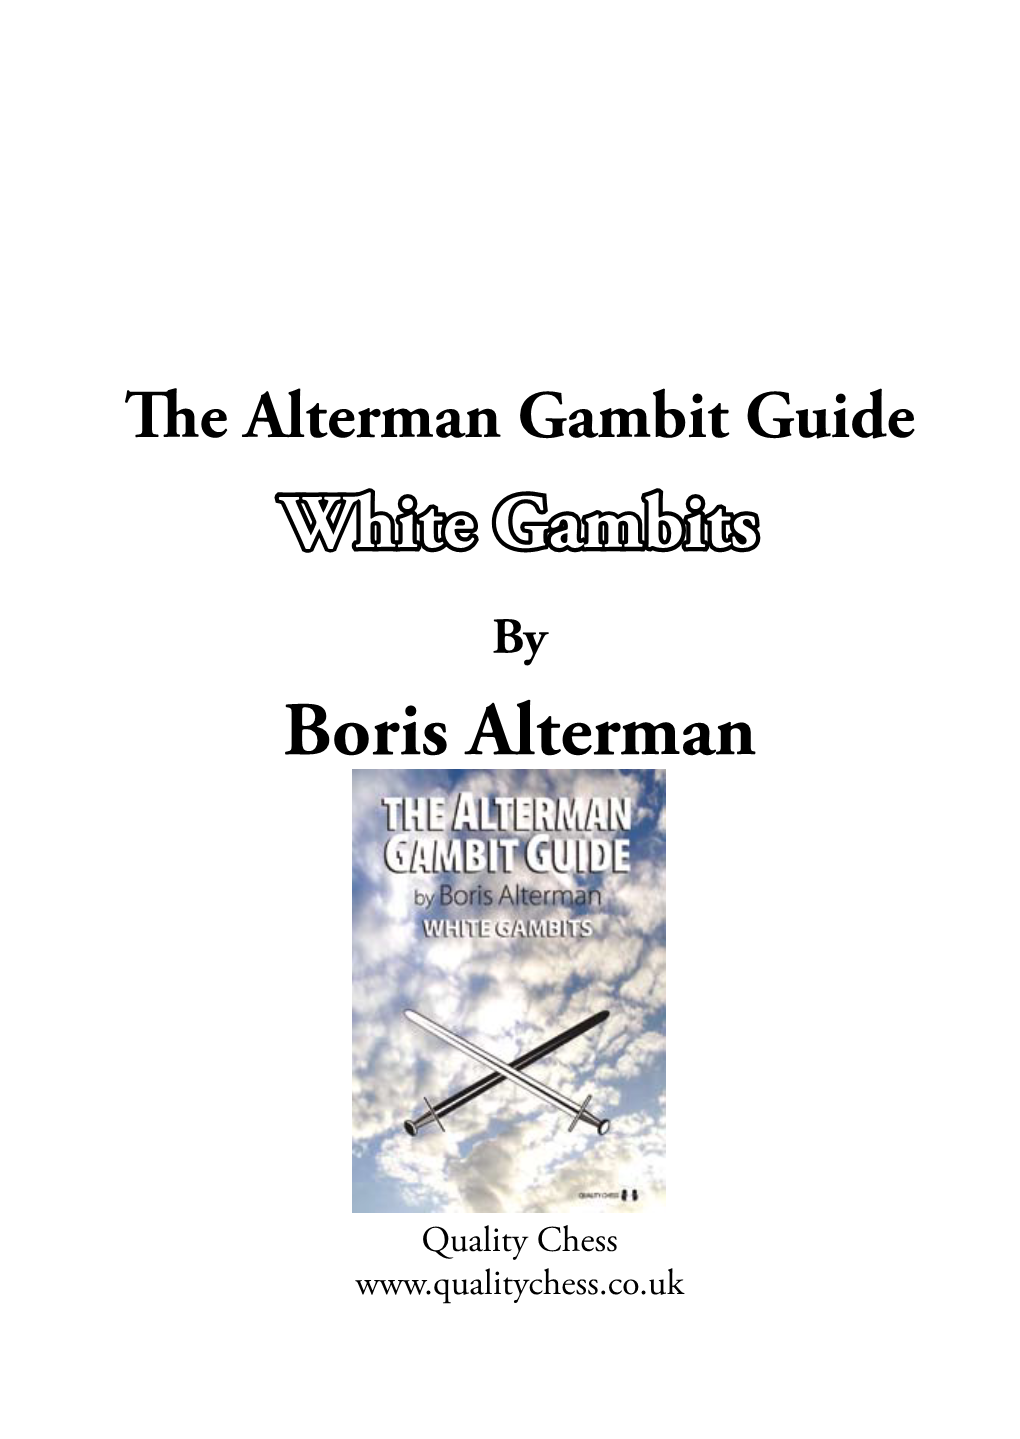 Alterman Gambit Guide White Gambits by Boris Alterman